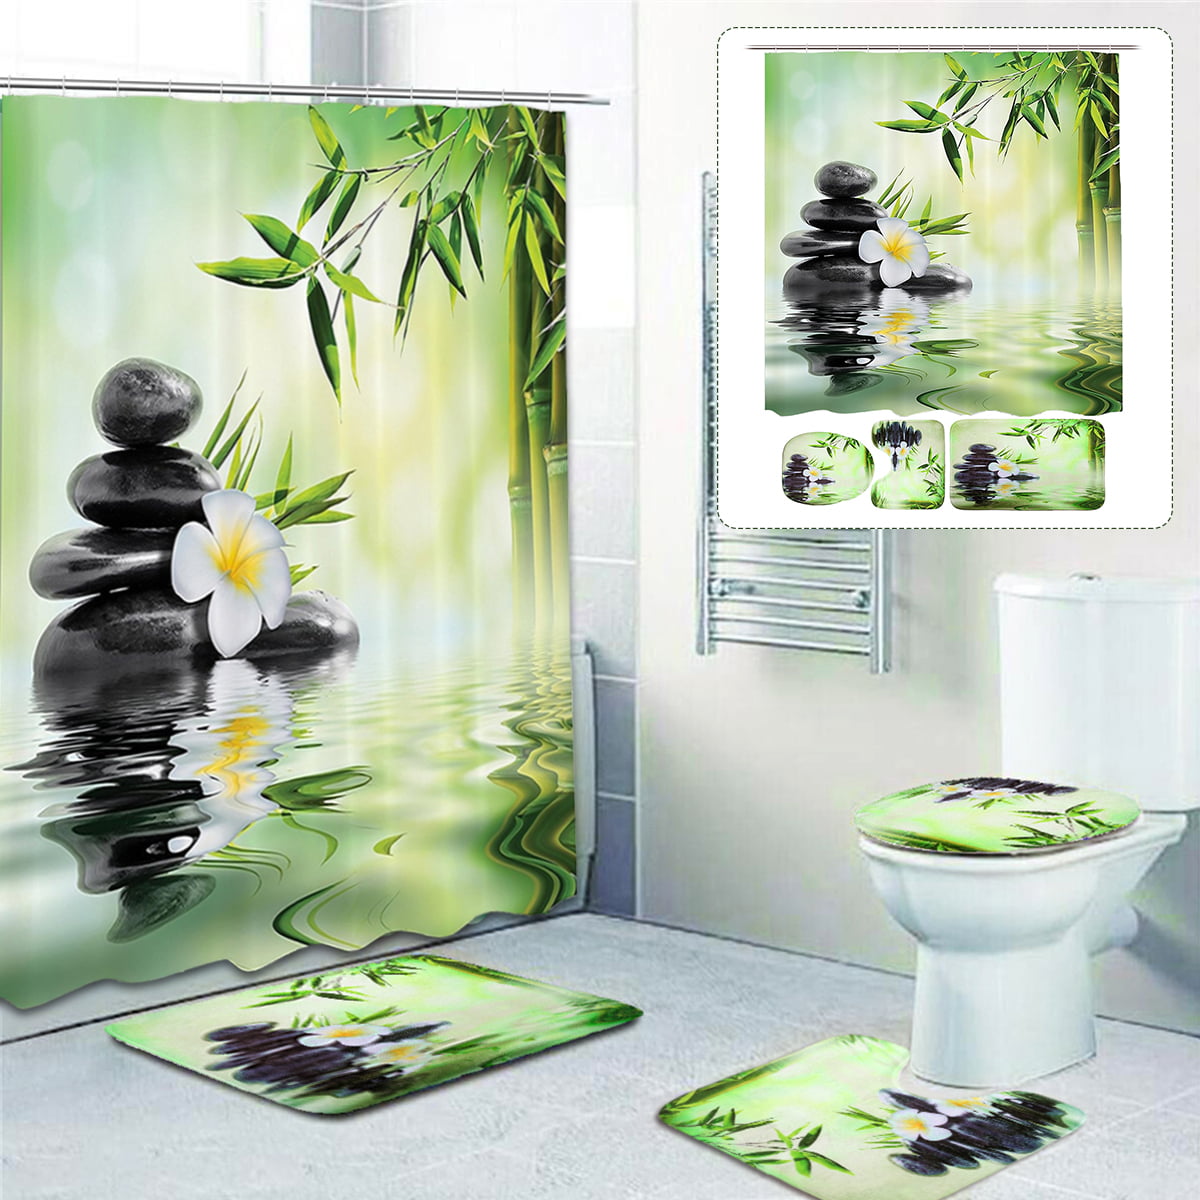 George Home Shower Curtain Bath Bathroom Includes 12 Rings 180x180 cm Waterpr 